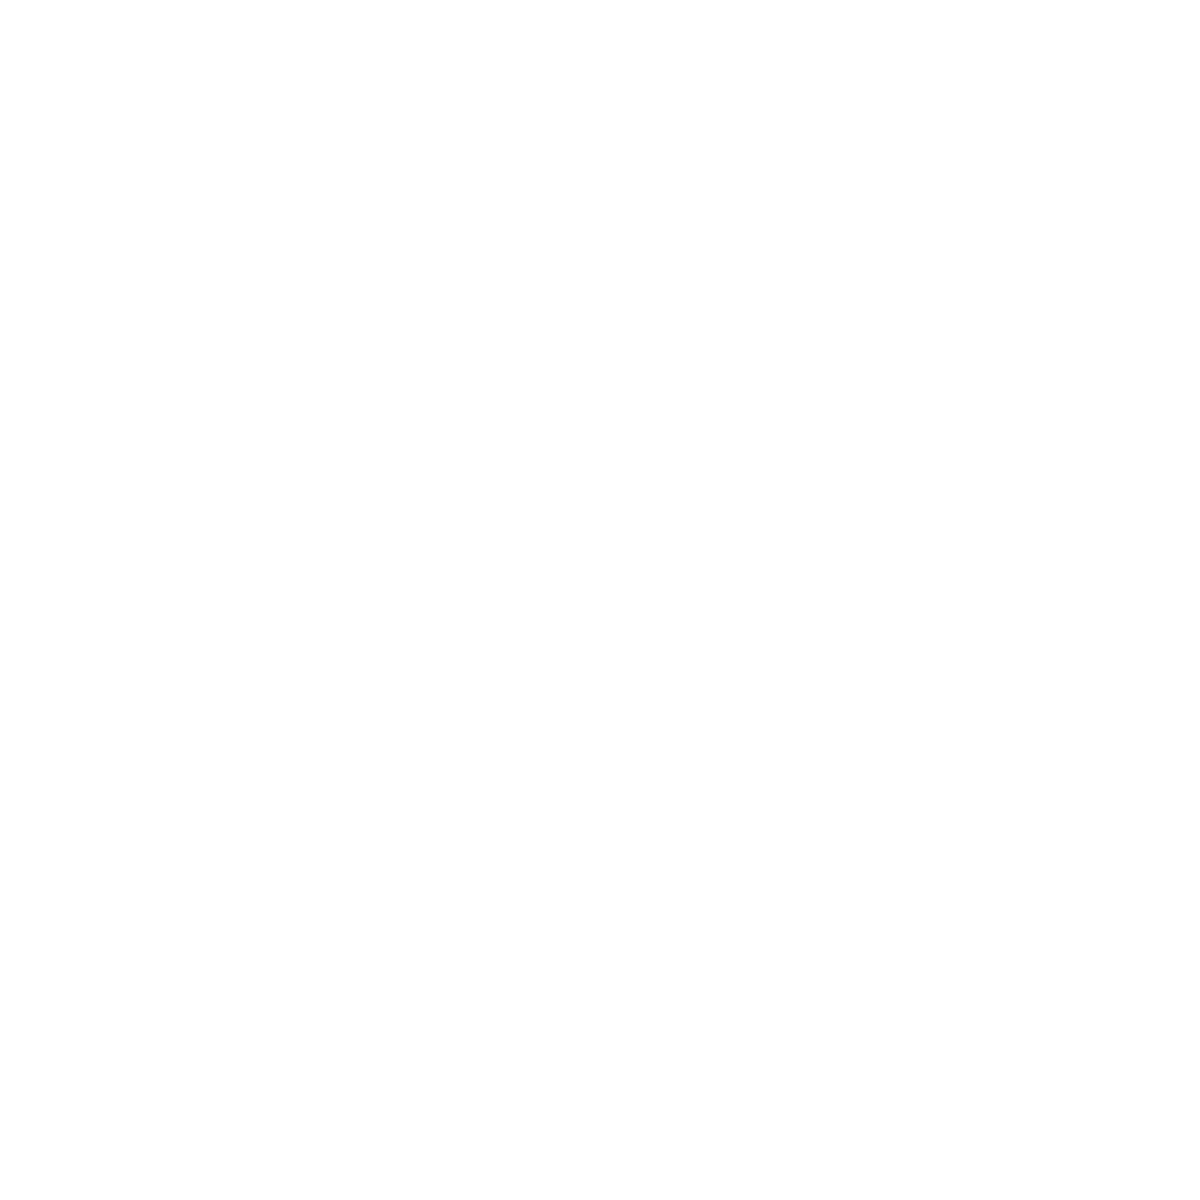 Mandarin Oriental Barcelona logo